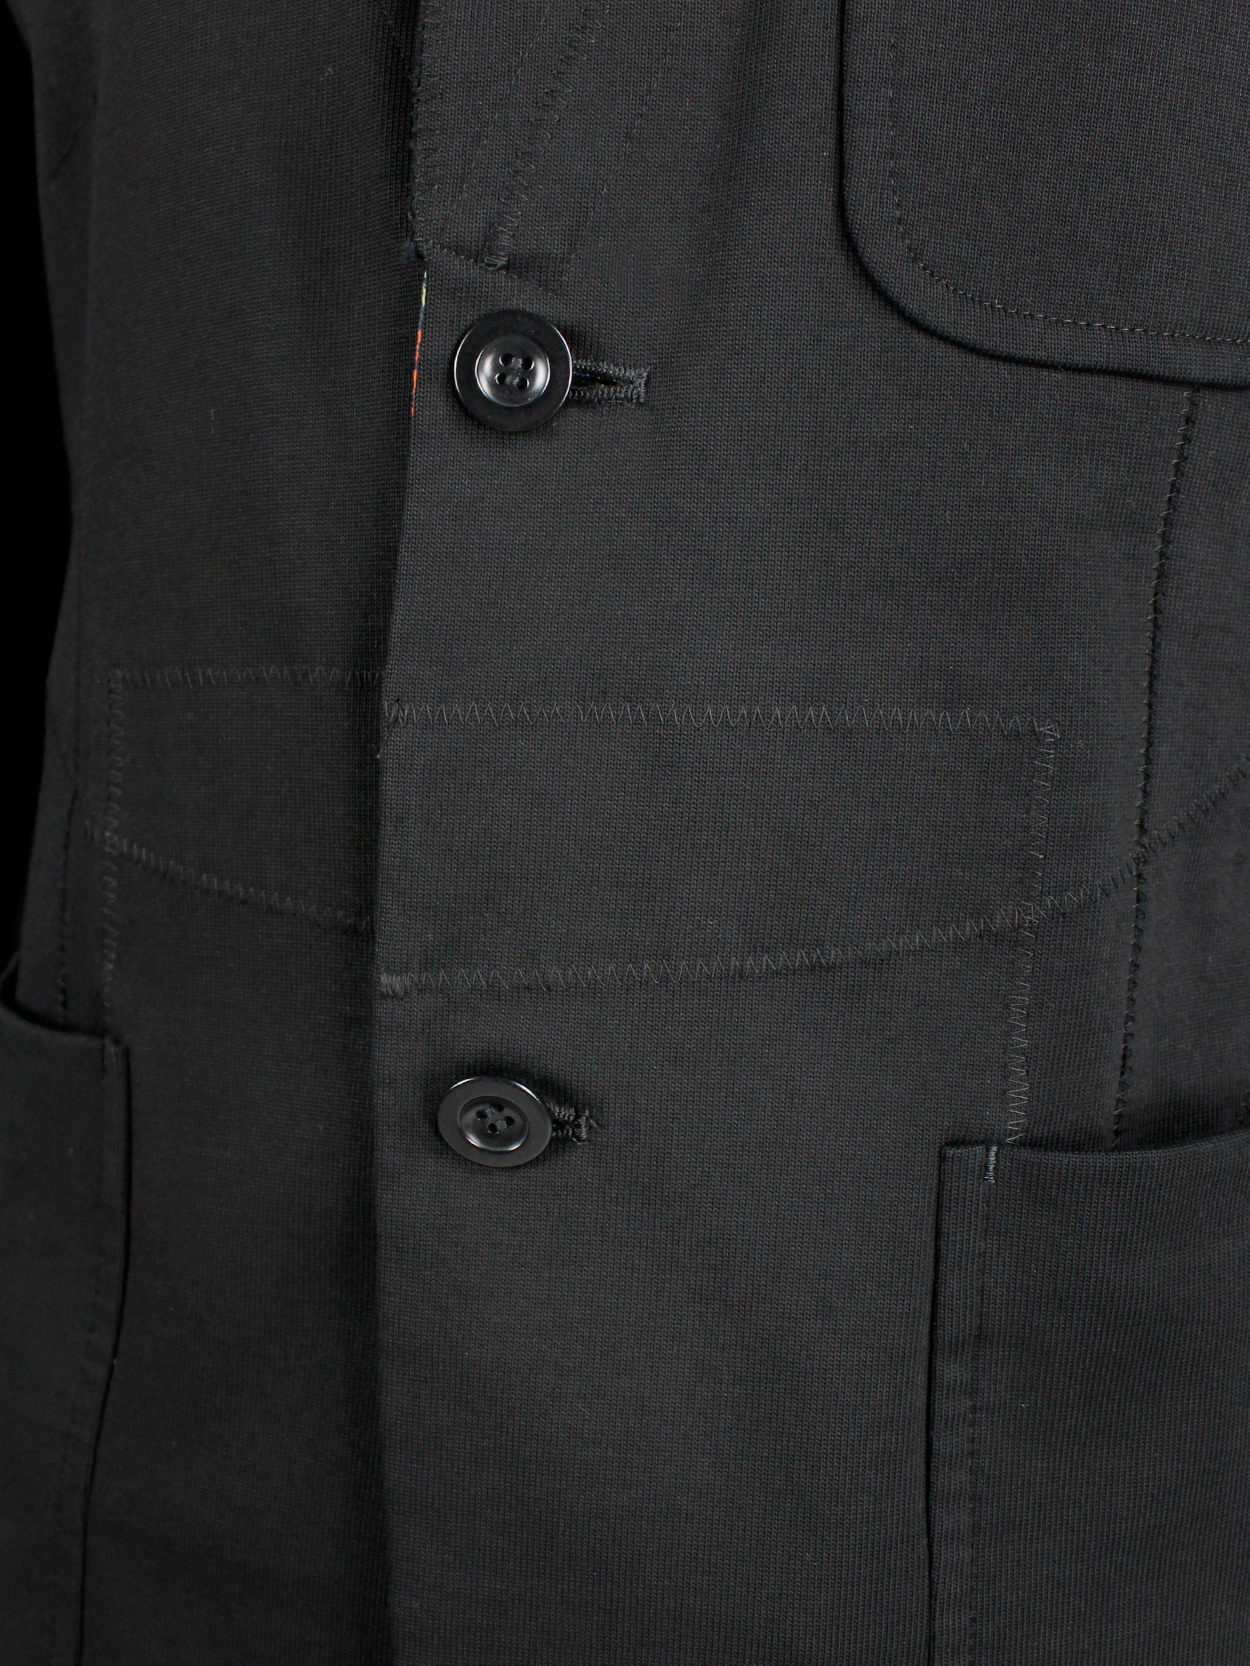 Junya Watanabe Man black blazer with biker details and panel stitching (15)